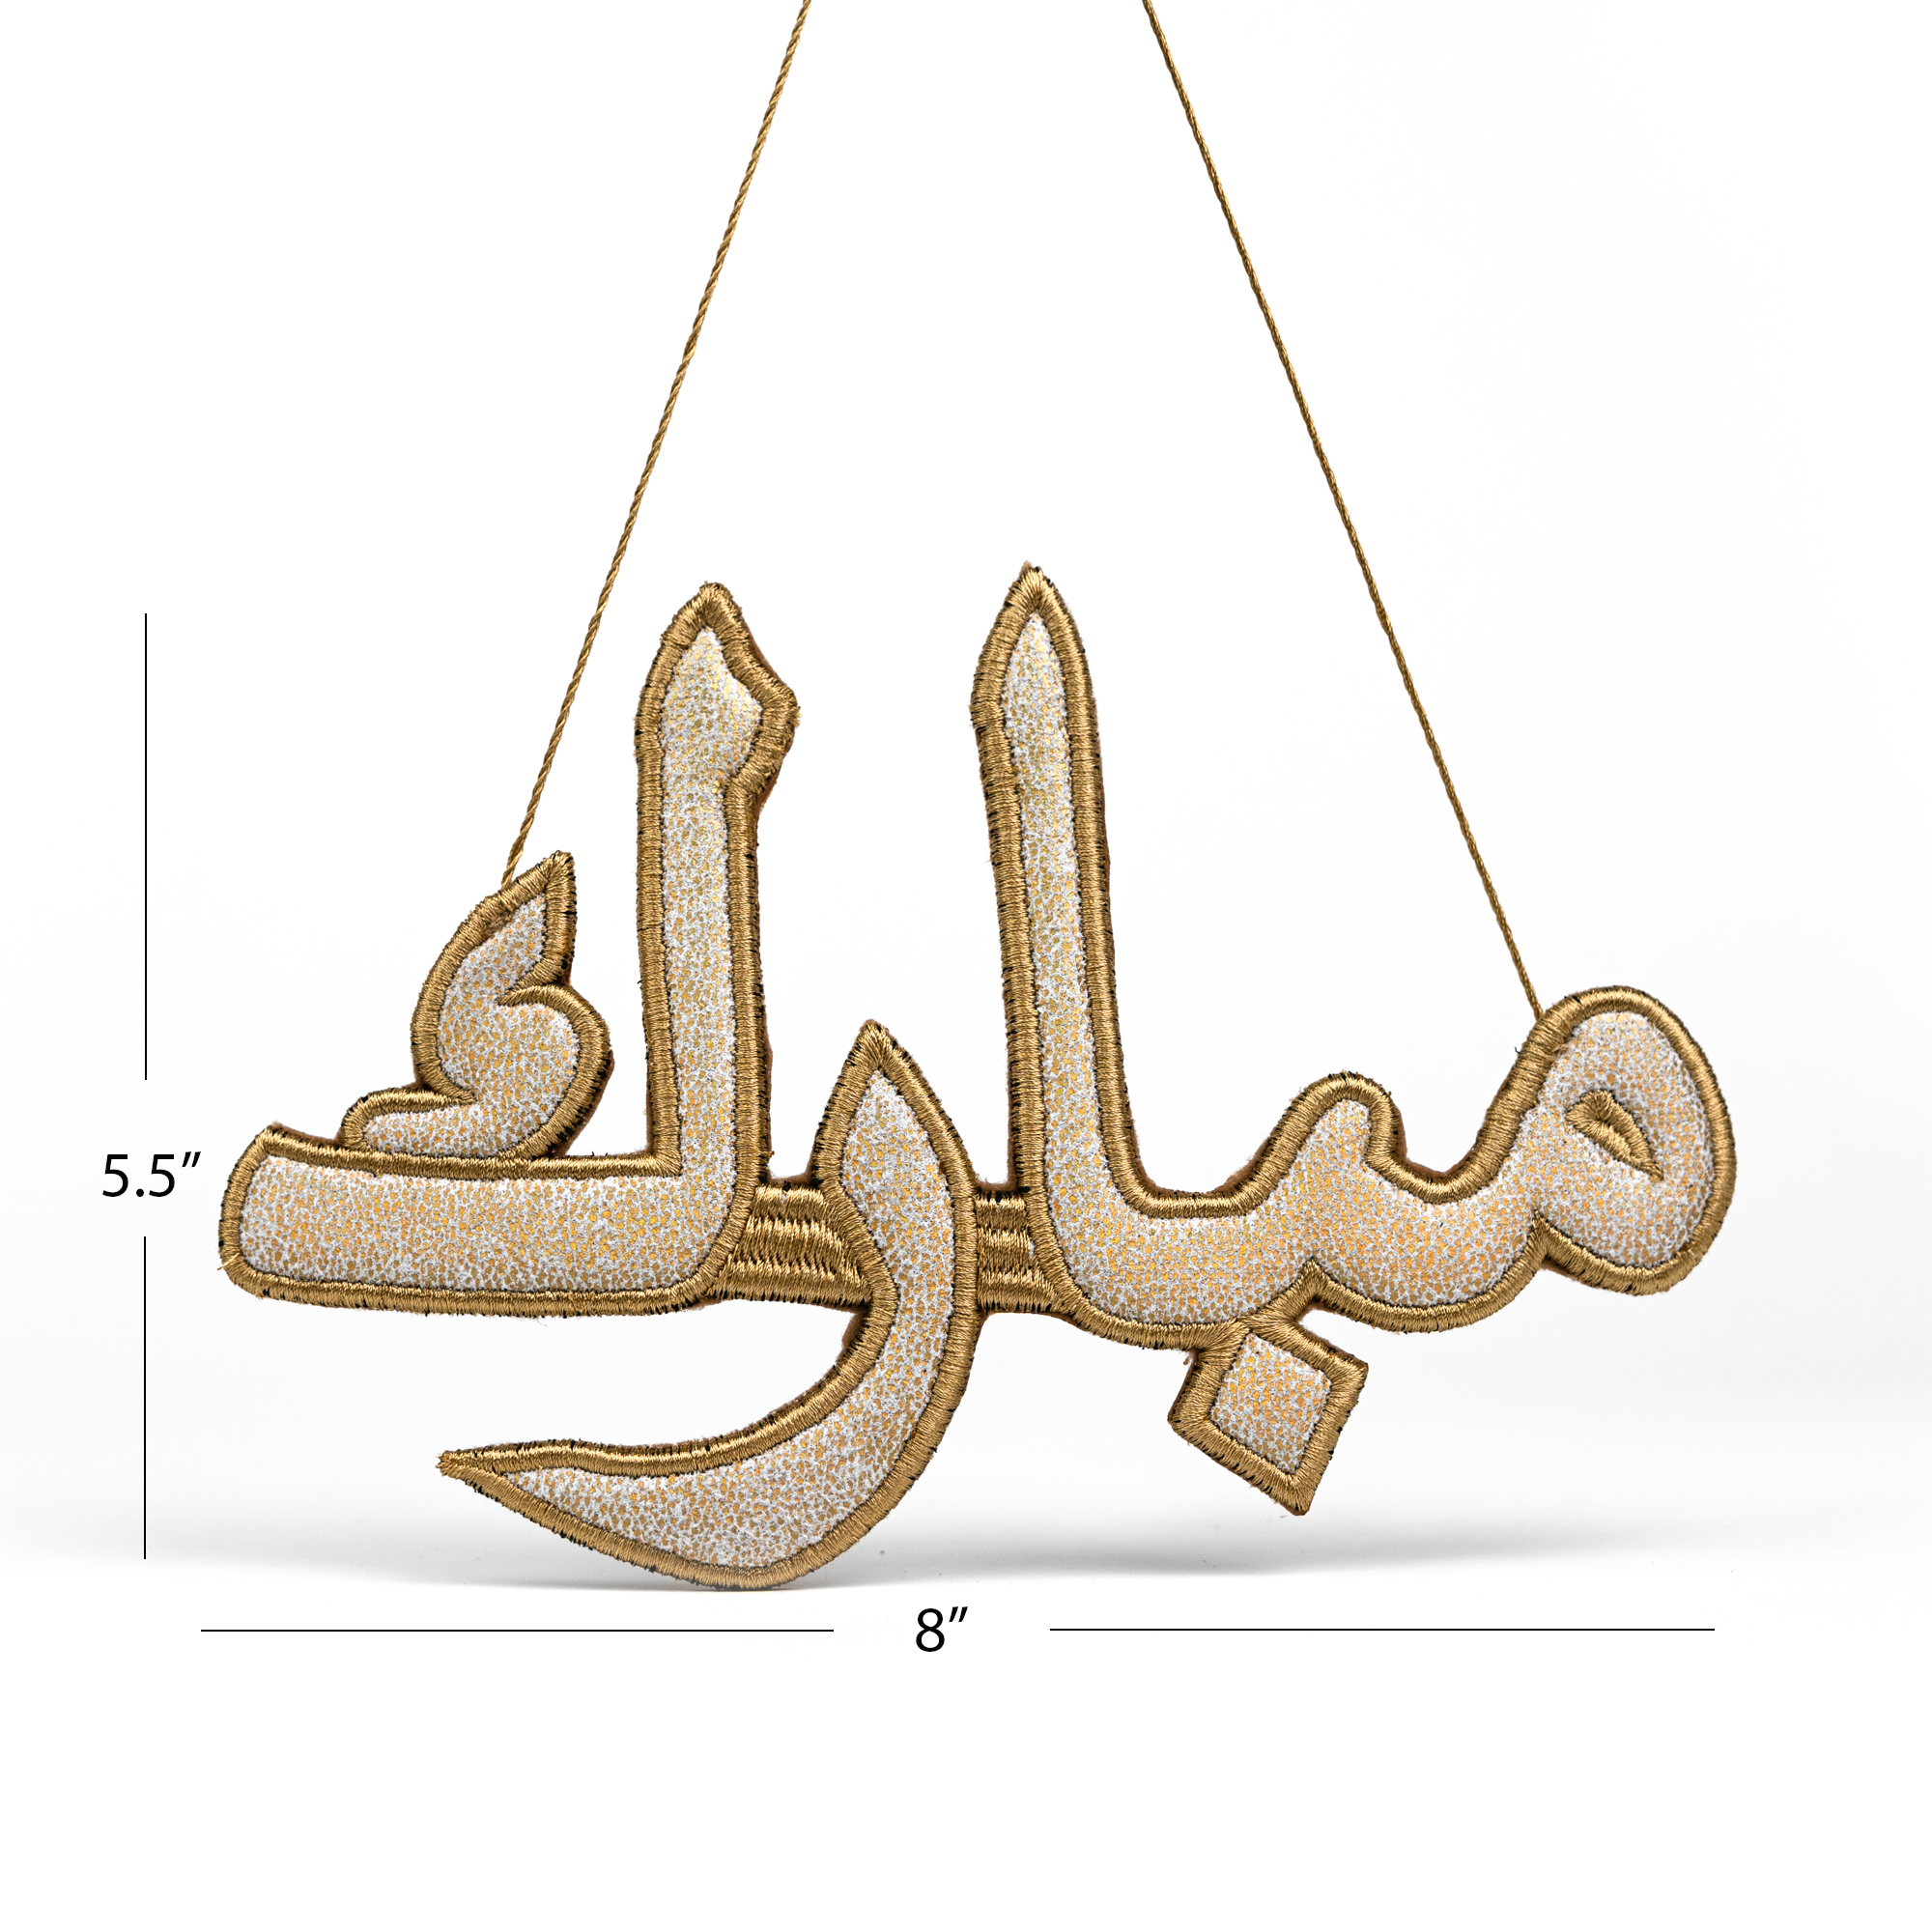 "مبارك" Mubarak Arabic Calligraphy Golden Embroidery Ornament With dimension